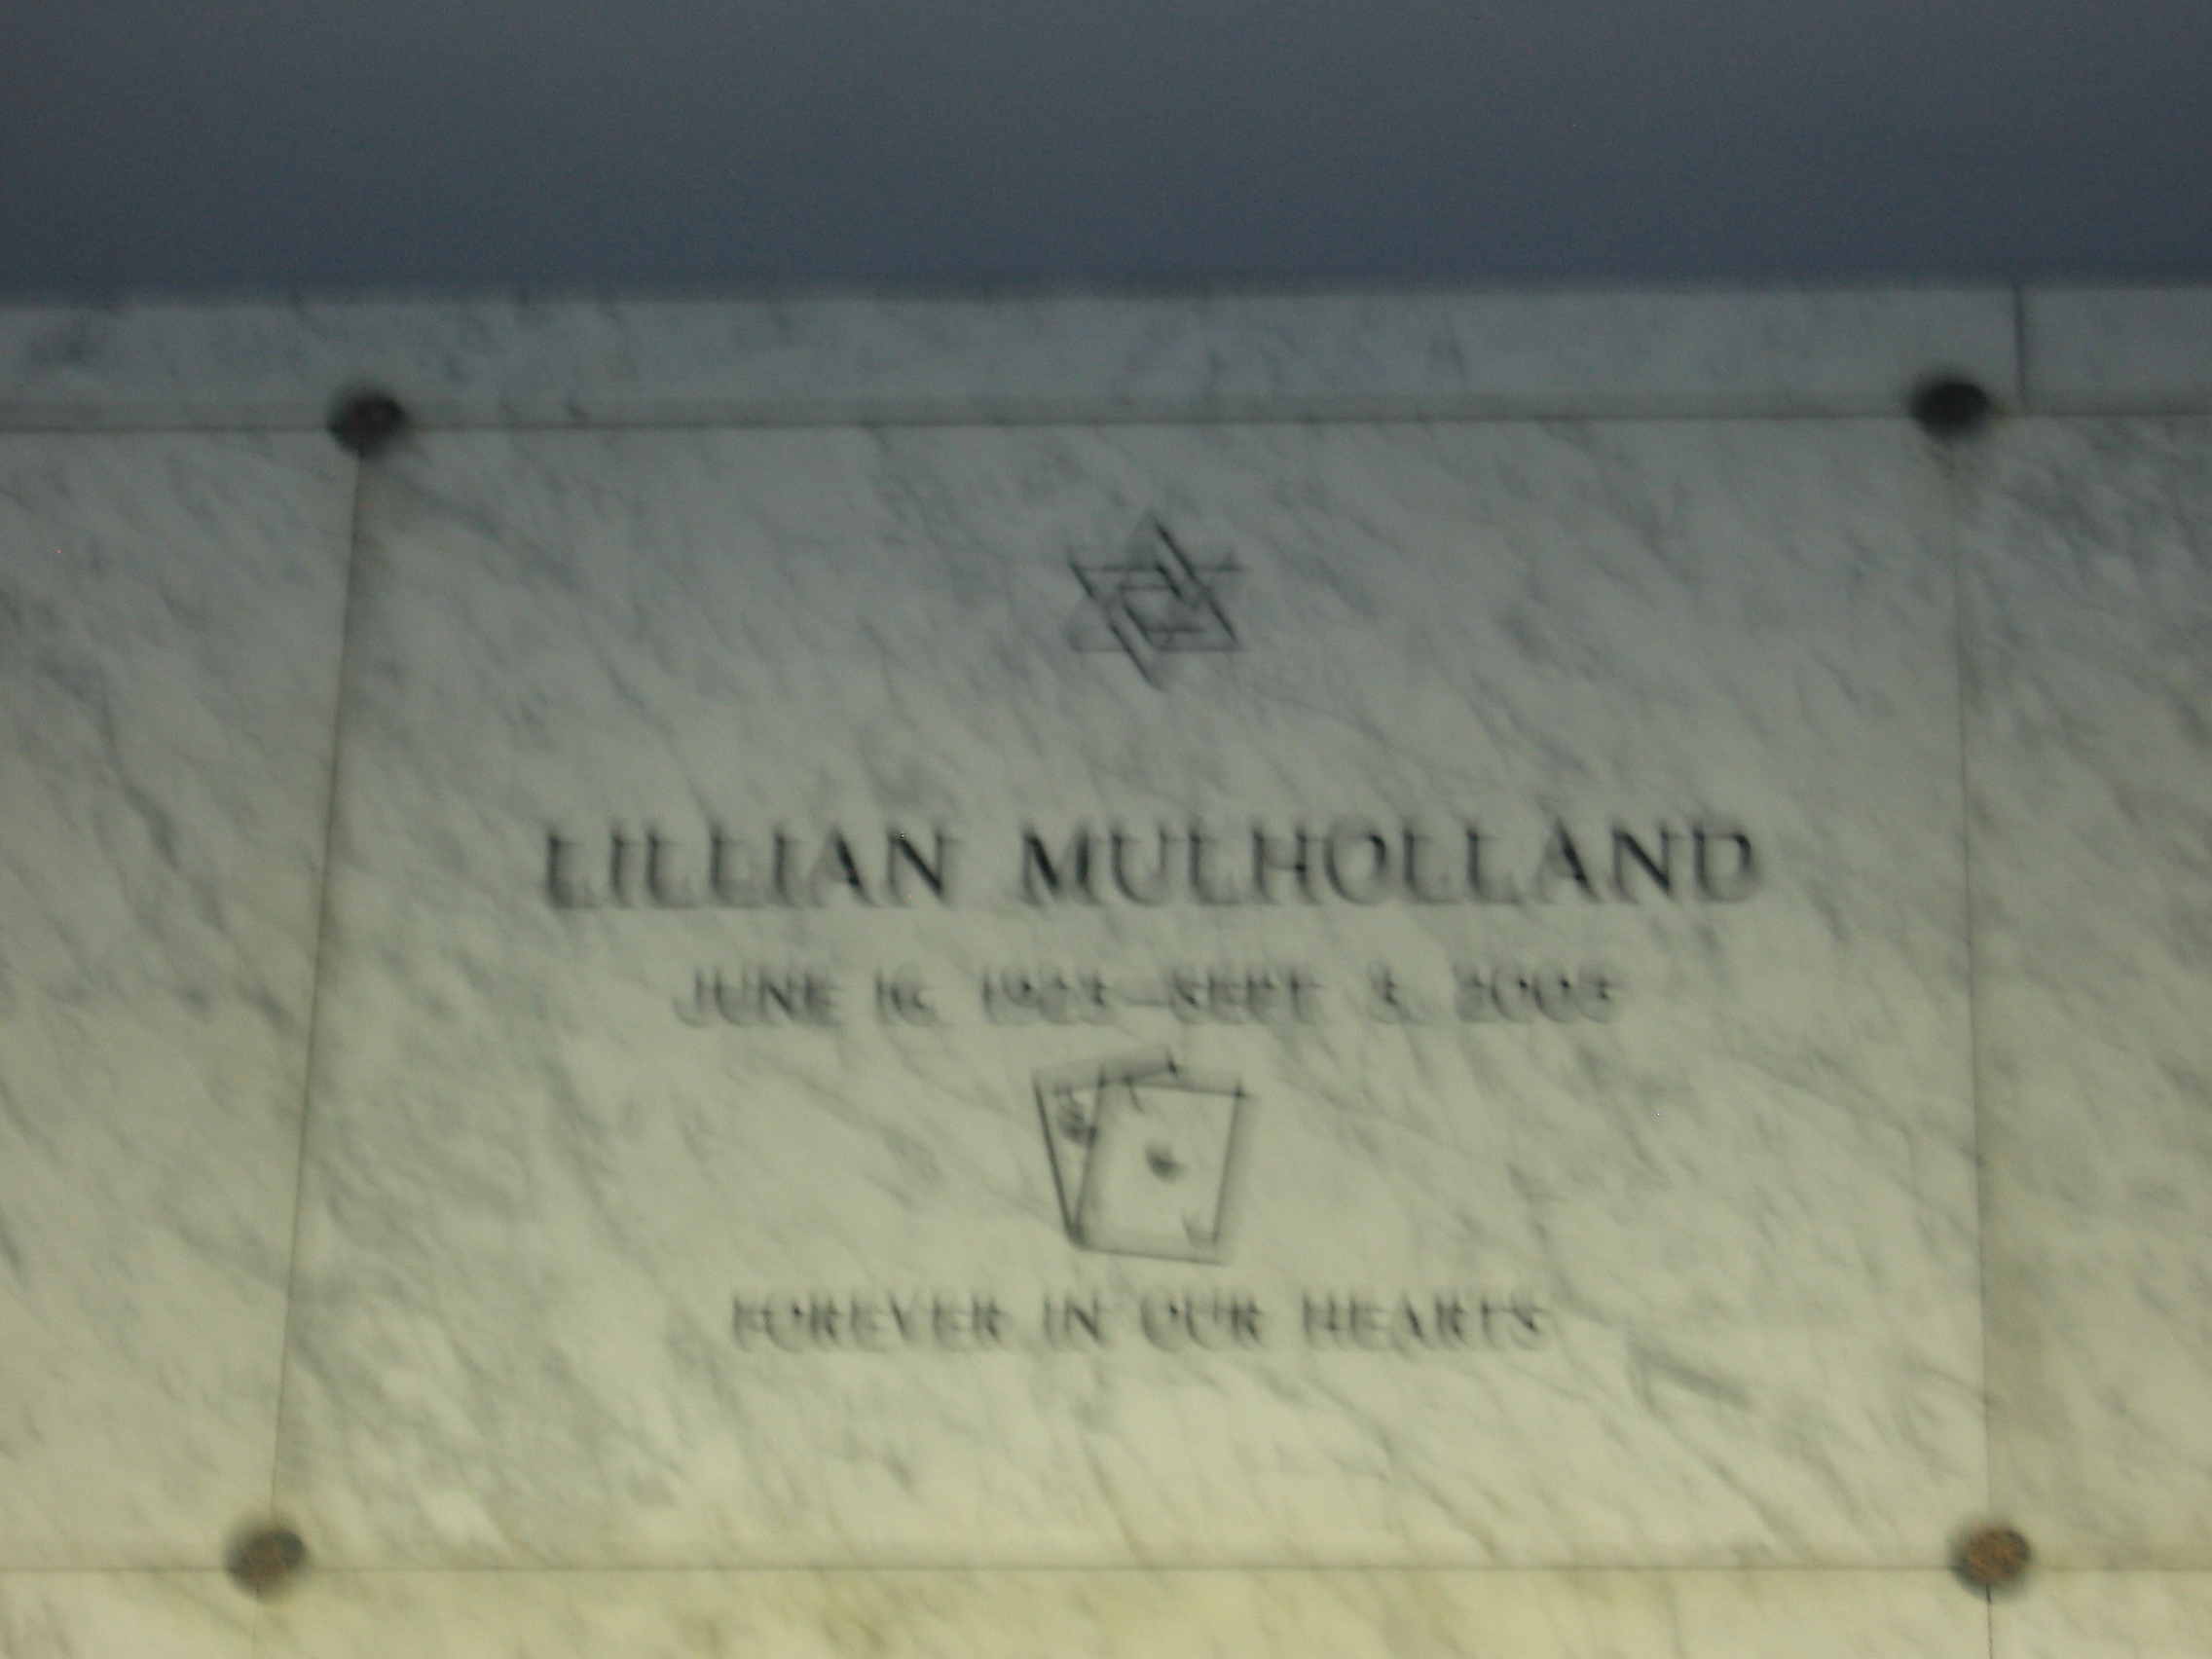 Lillian Mulholland